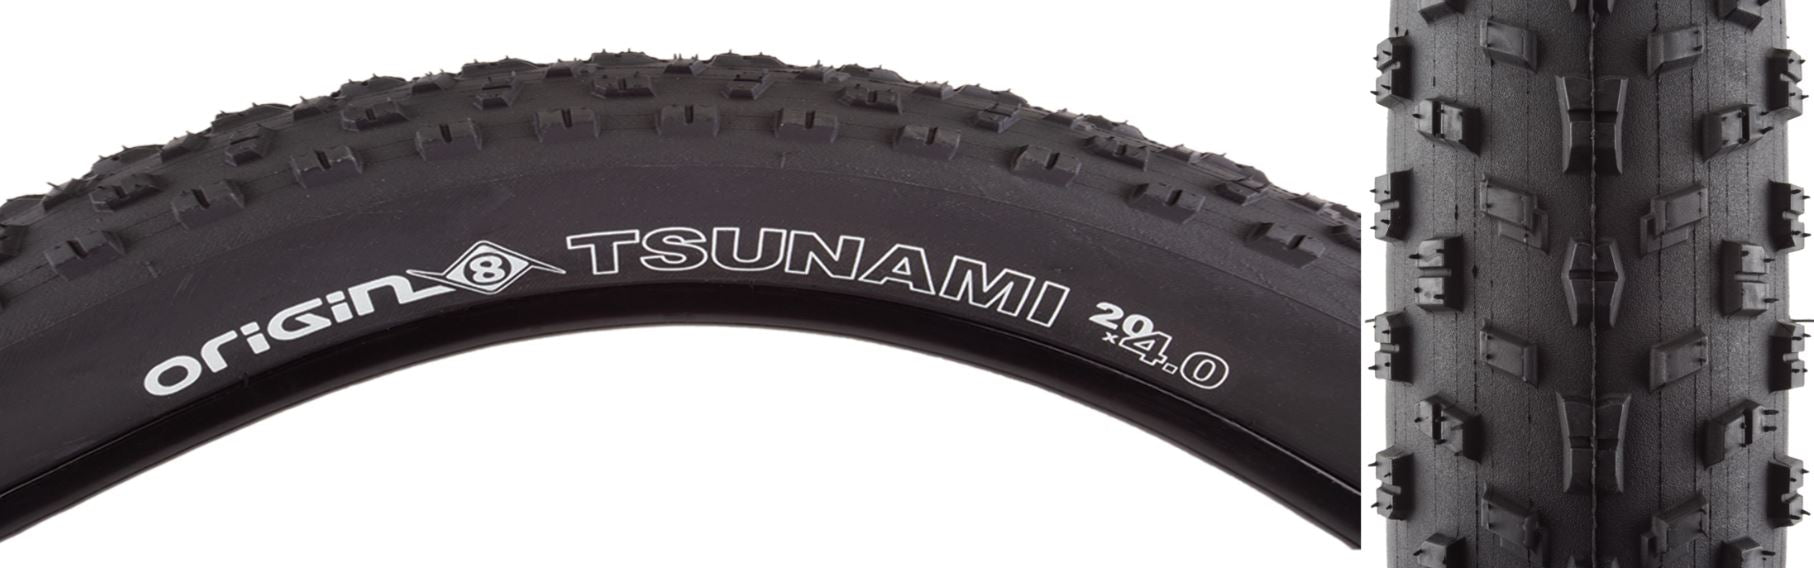 Origin8 Tsunami Tire 20 x 4.0" (102-406mm)